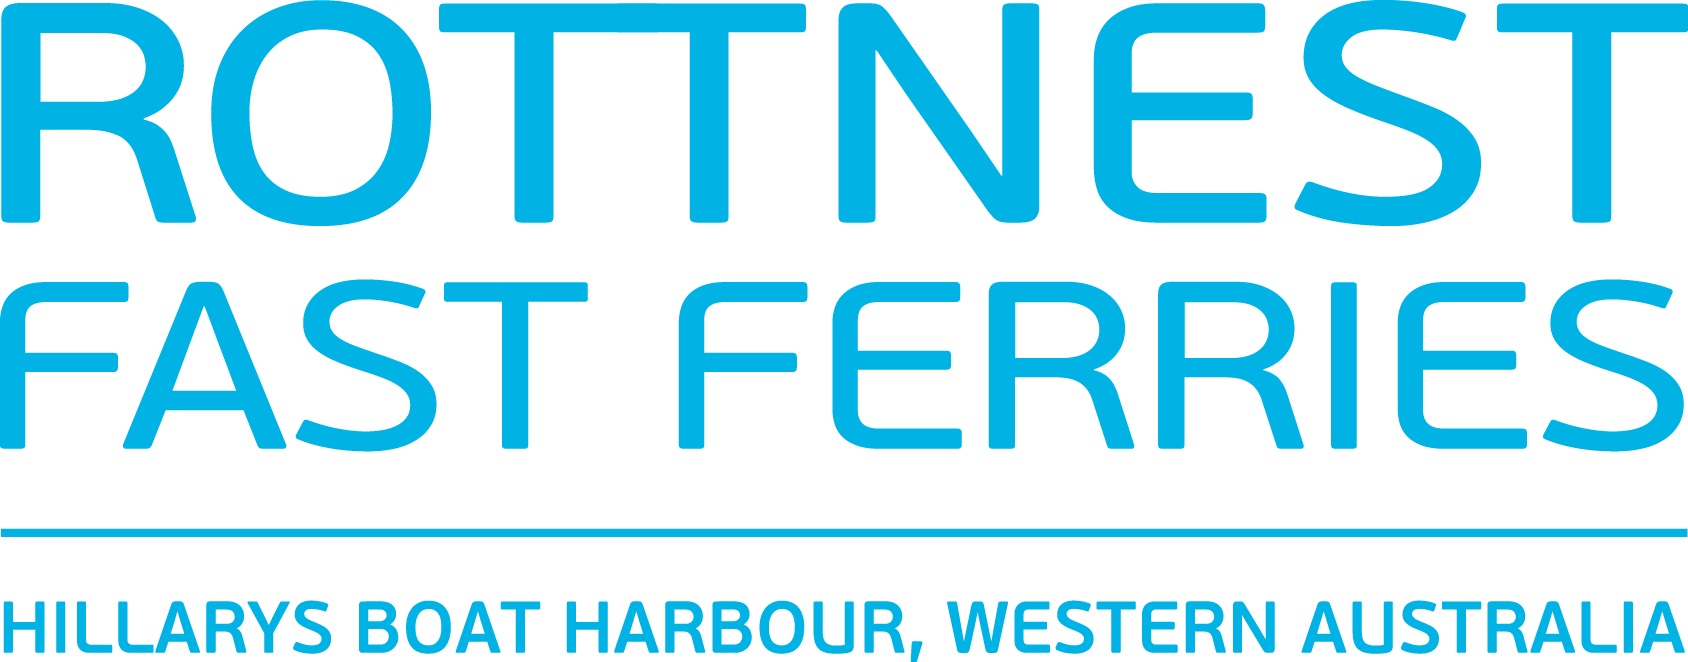 Rottnest Fast Ferries logo